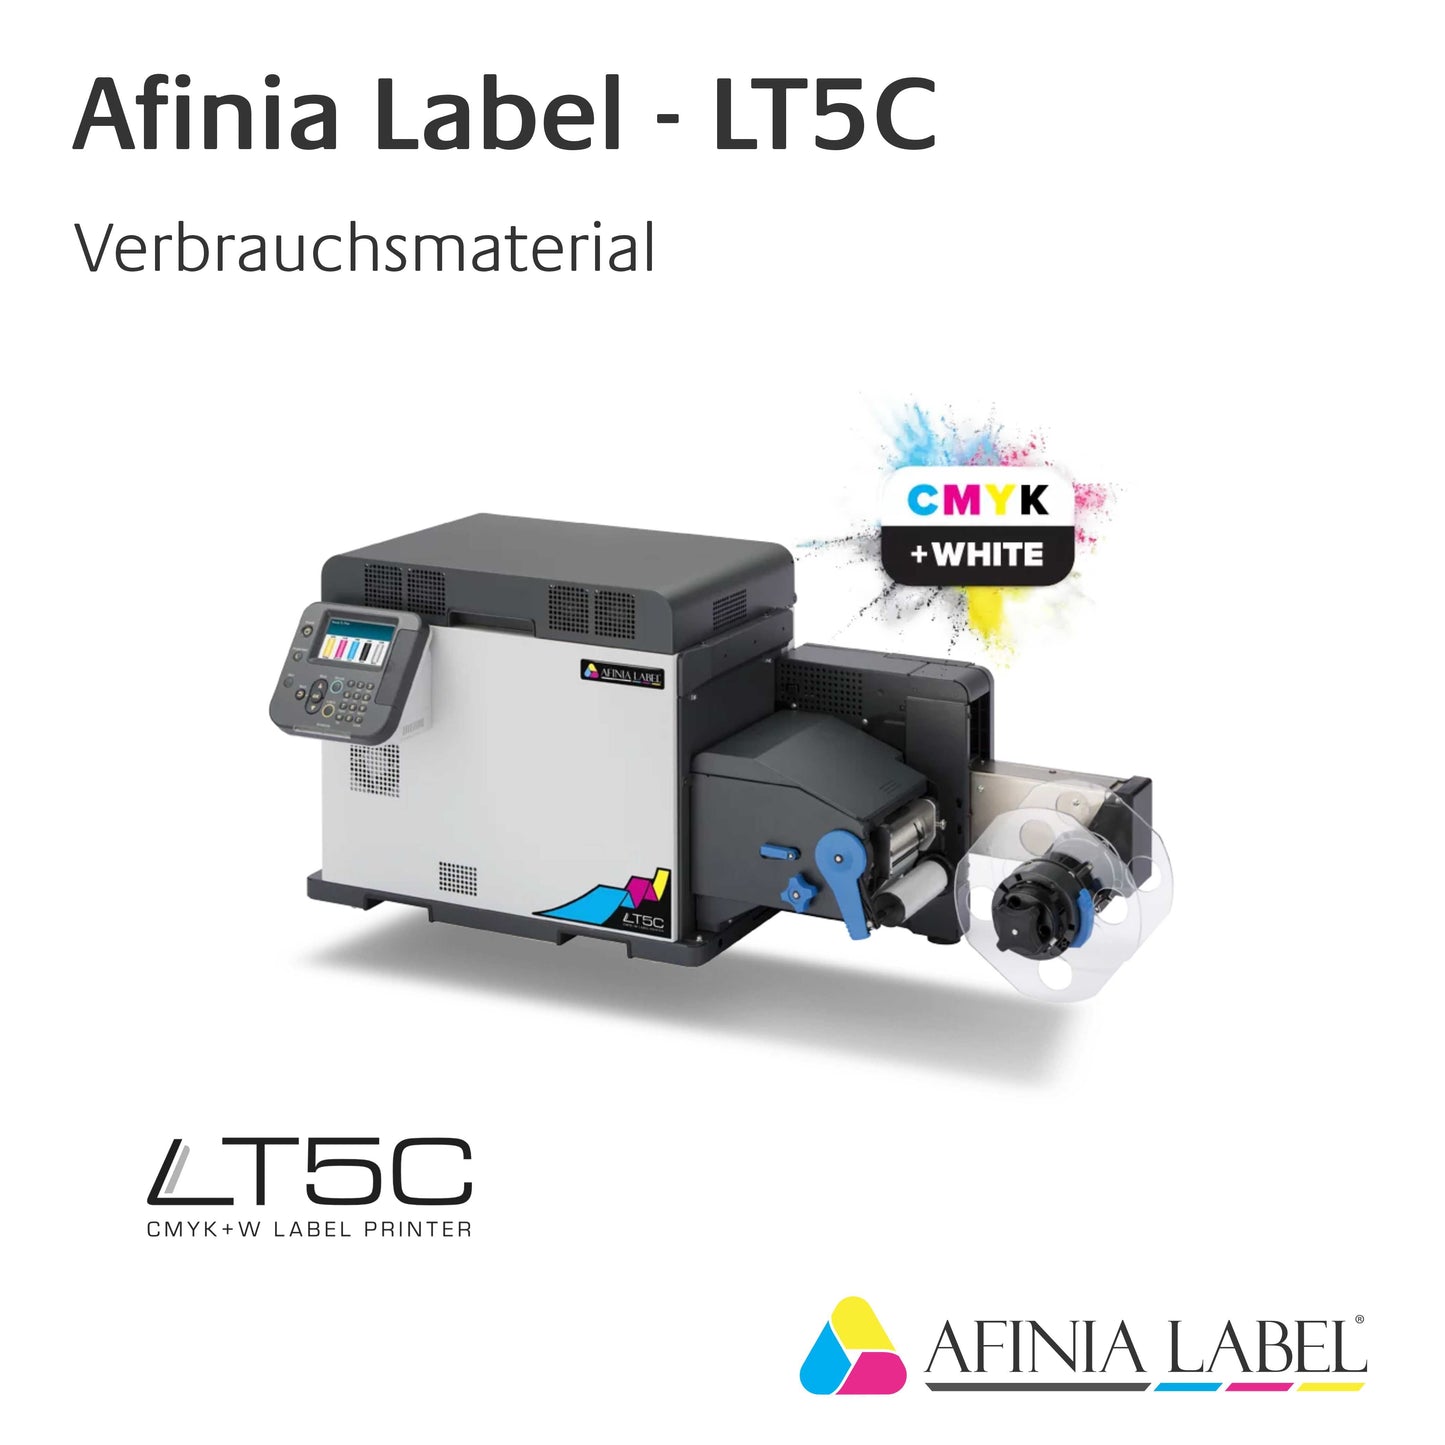 Afinia Label LT5C - Toner / Trommel - Schwarz